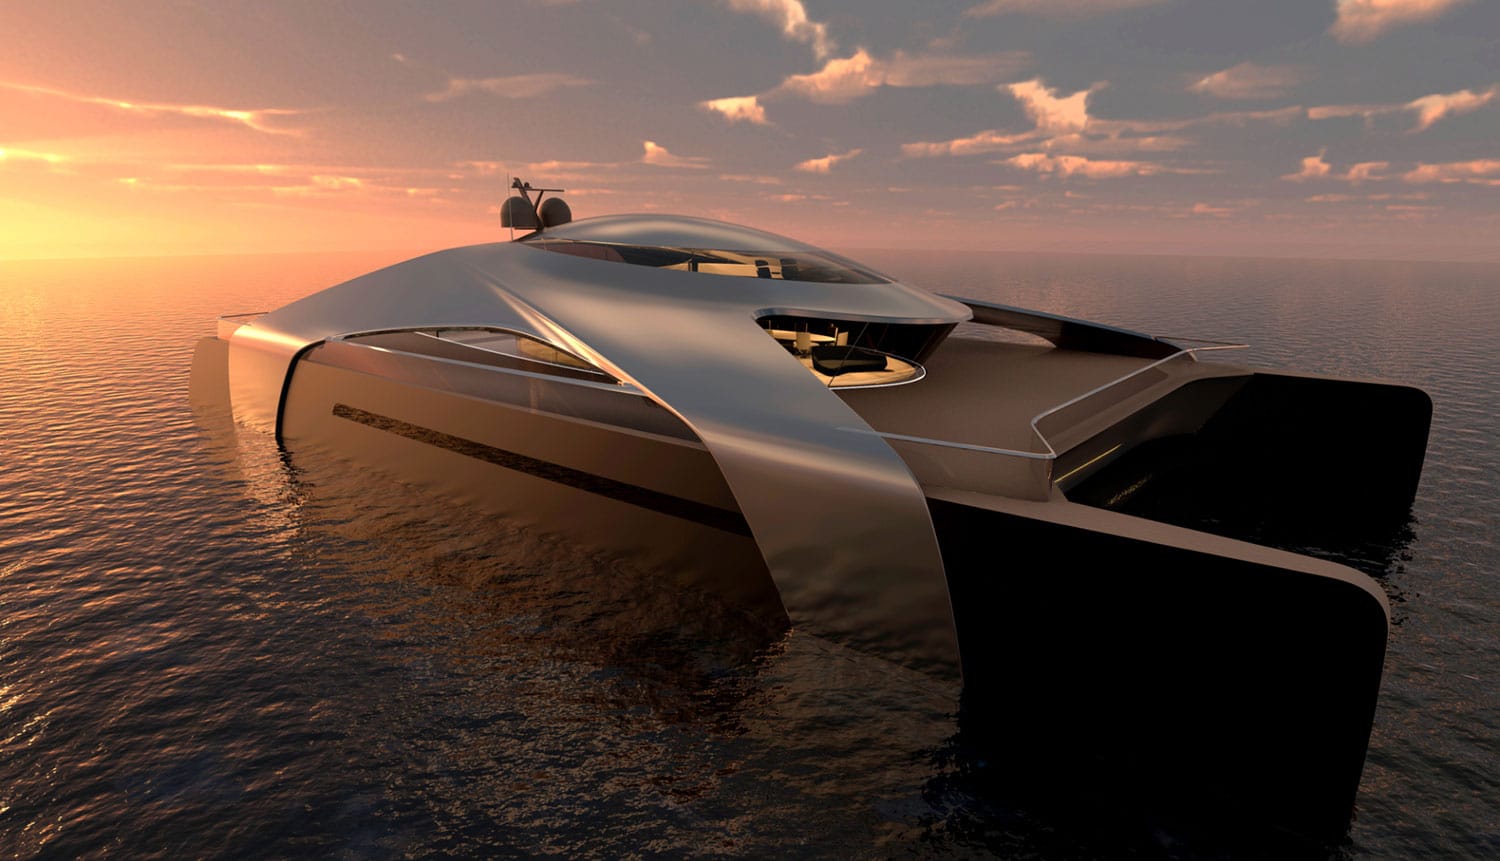 Hydrogen-powered catamaran concept for long-range zero-emission cruising.